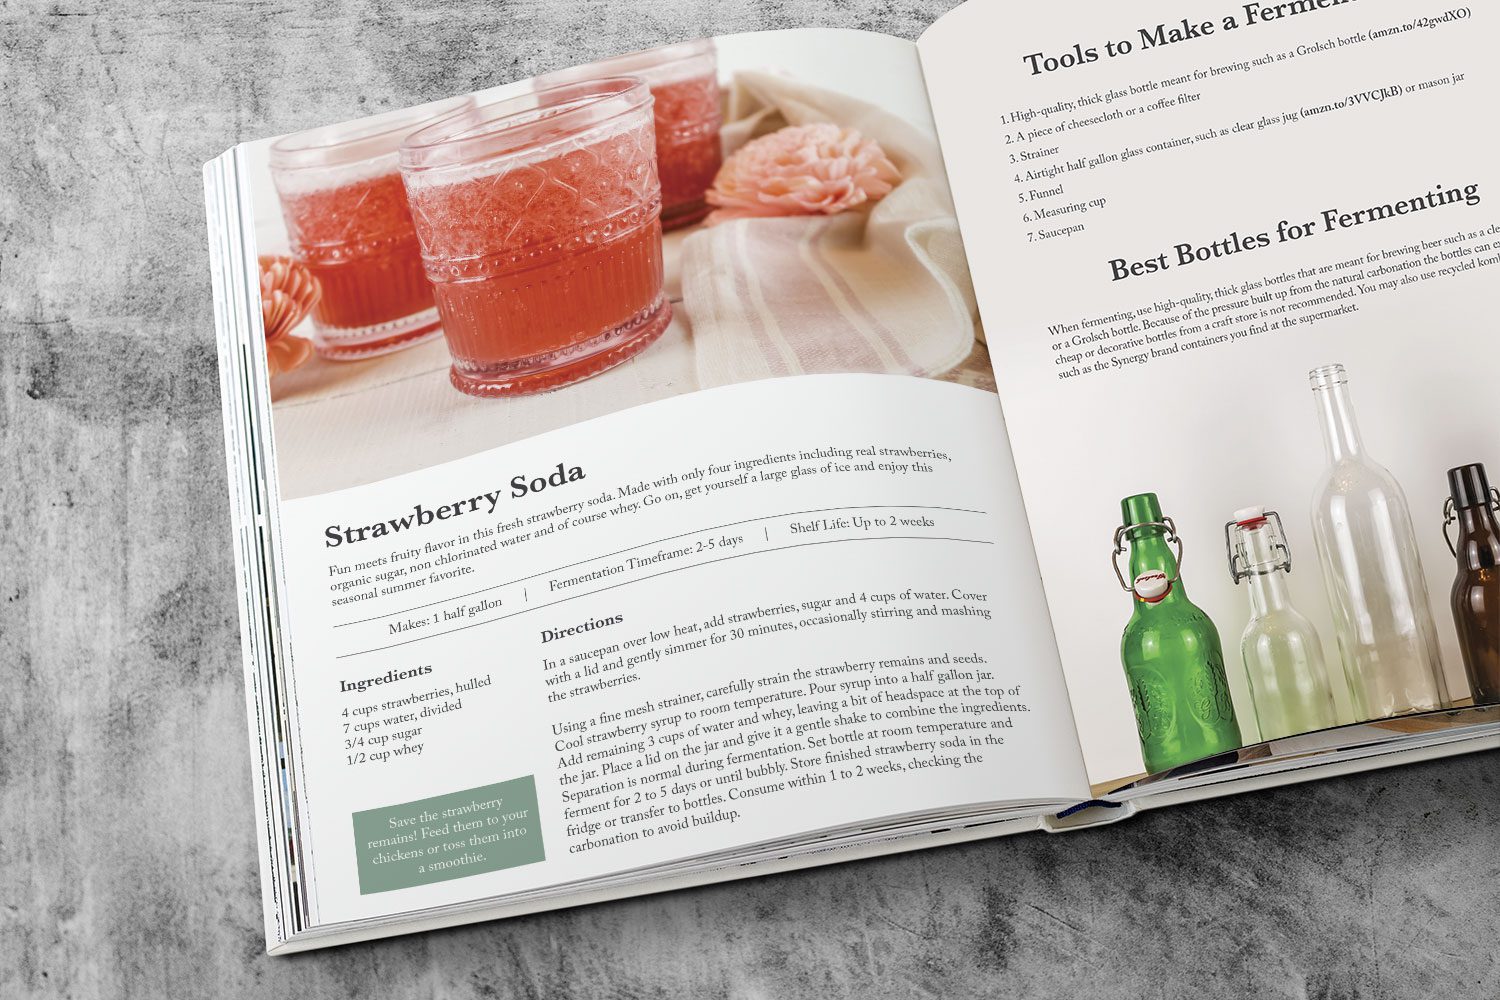 book flipped open to reveal soda recipes include strawberry soda